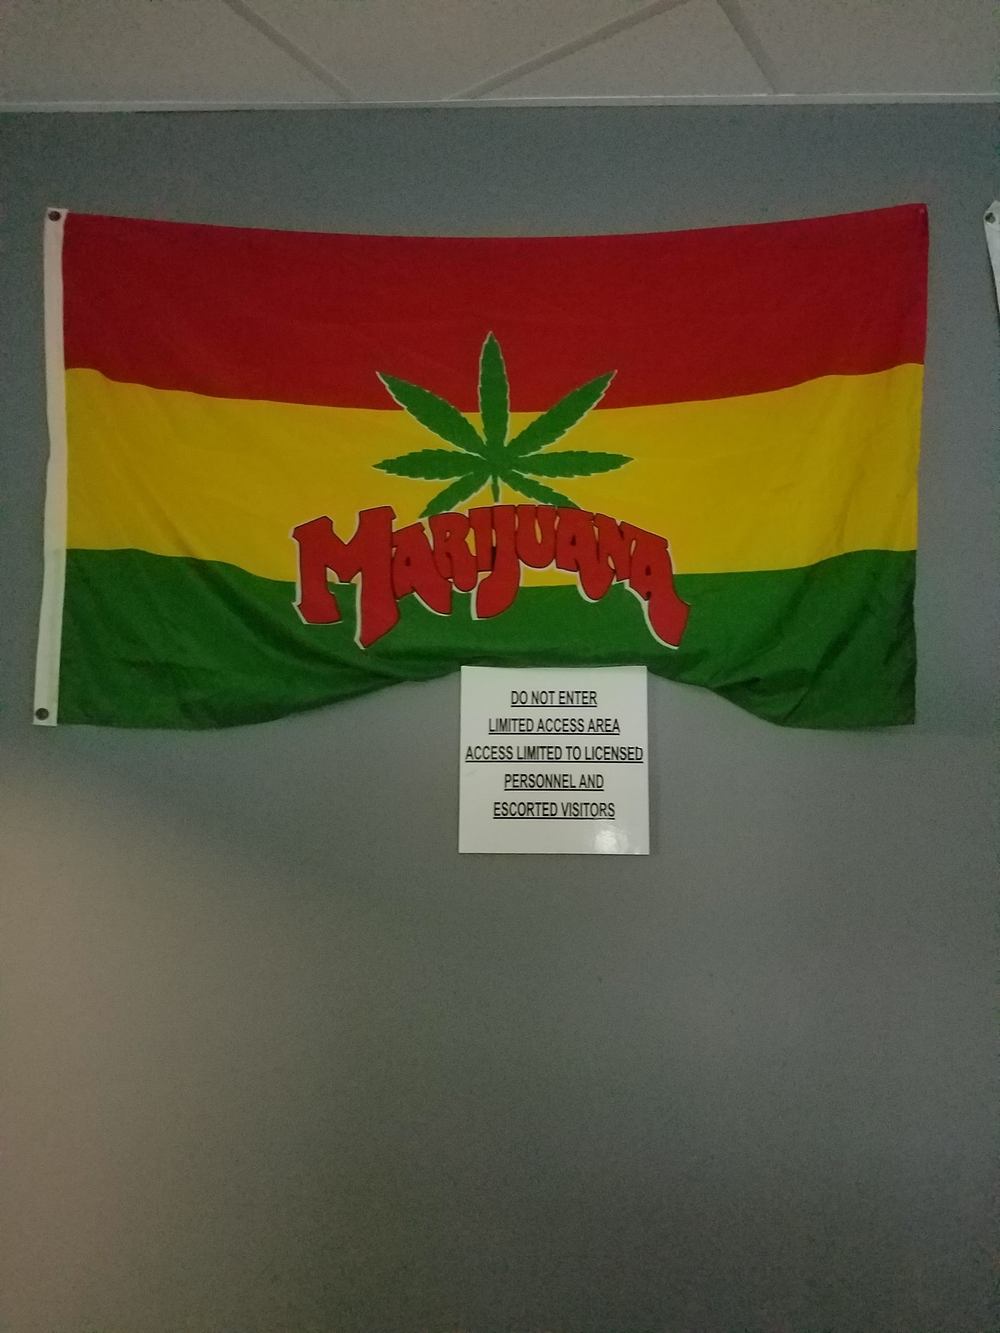 Star Buds Recreational Marijuana Dispensary Pecos